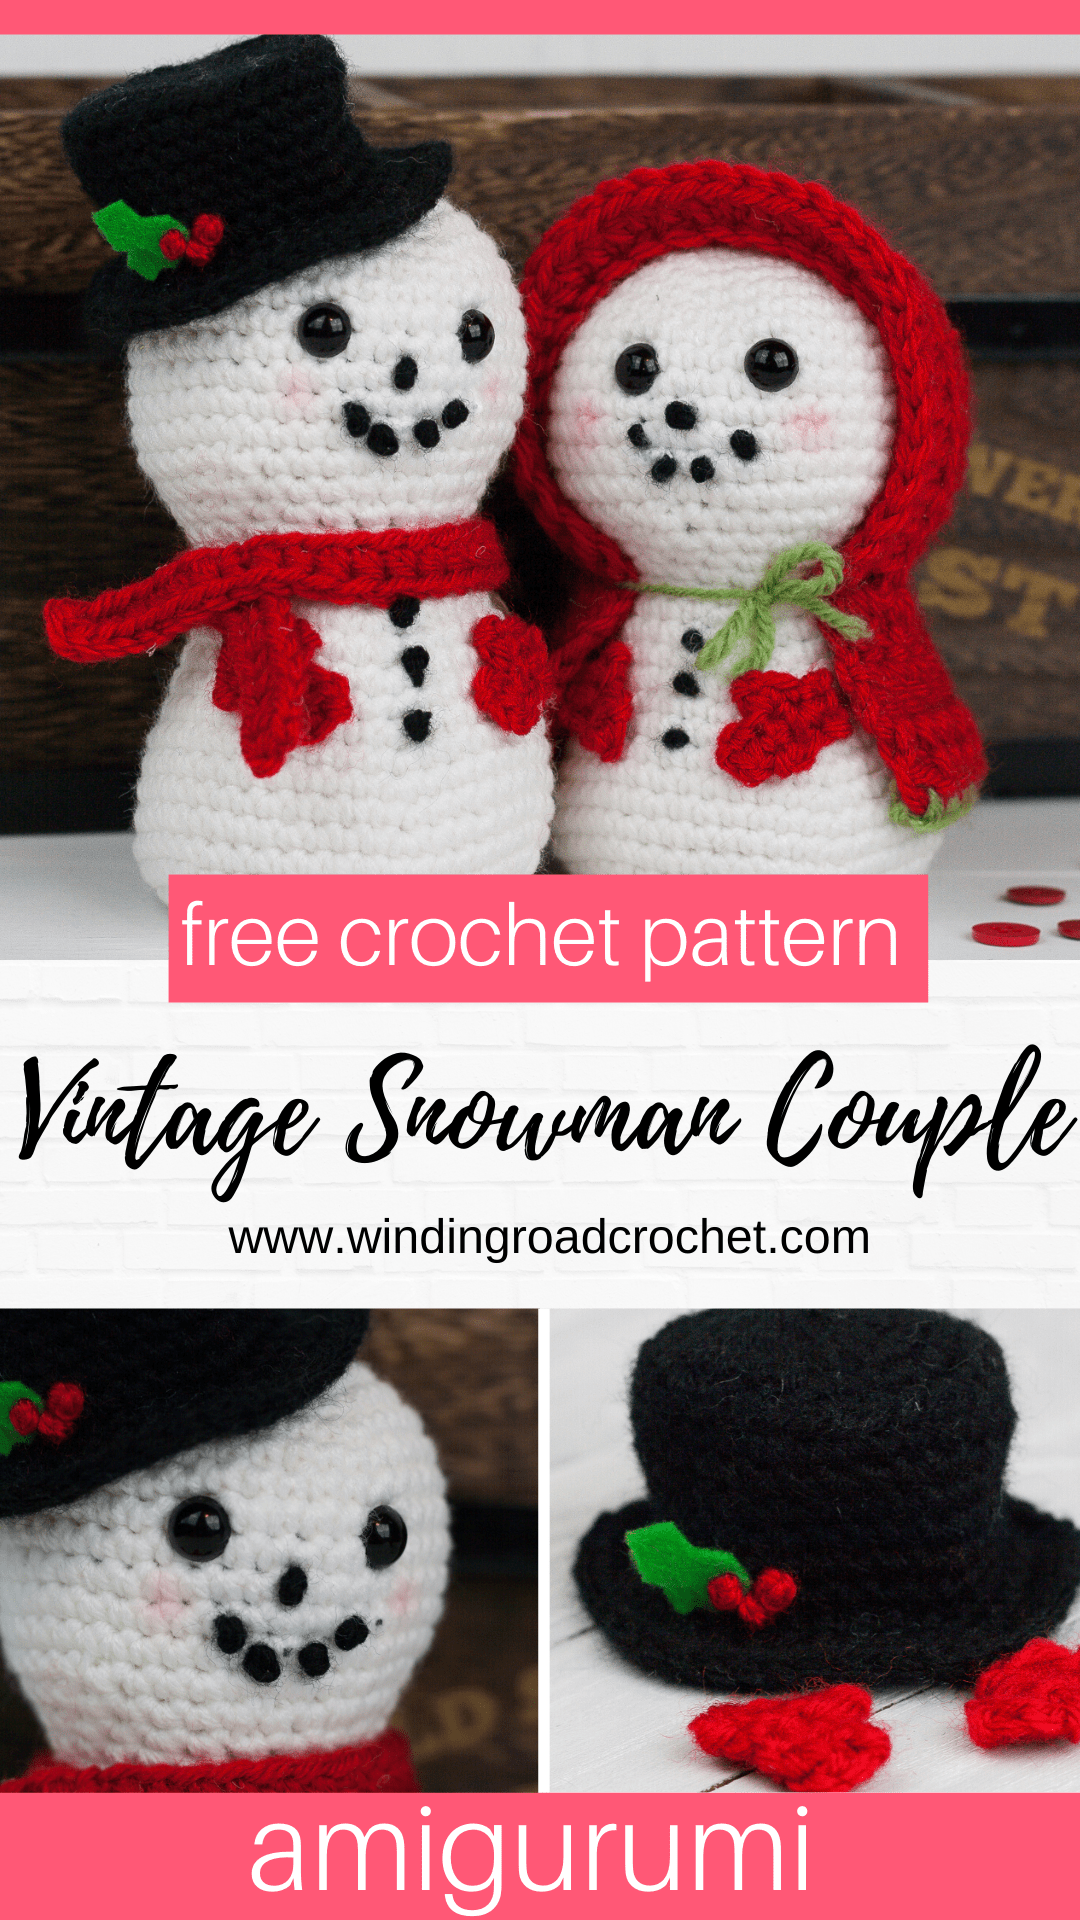 Snowman Couple Amigurumi Free Crochet Pattern